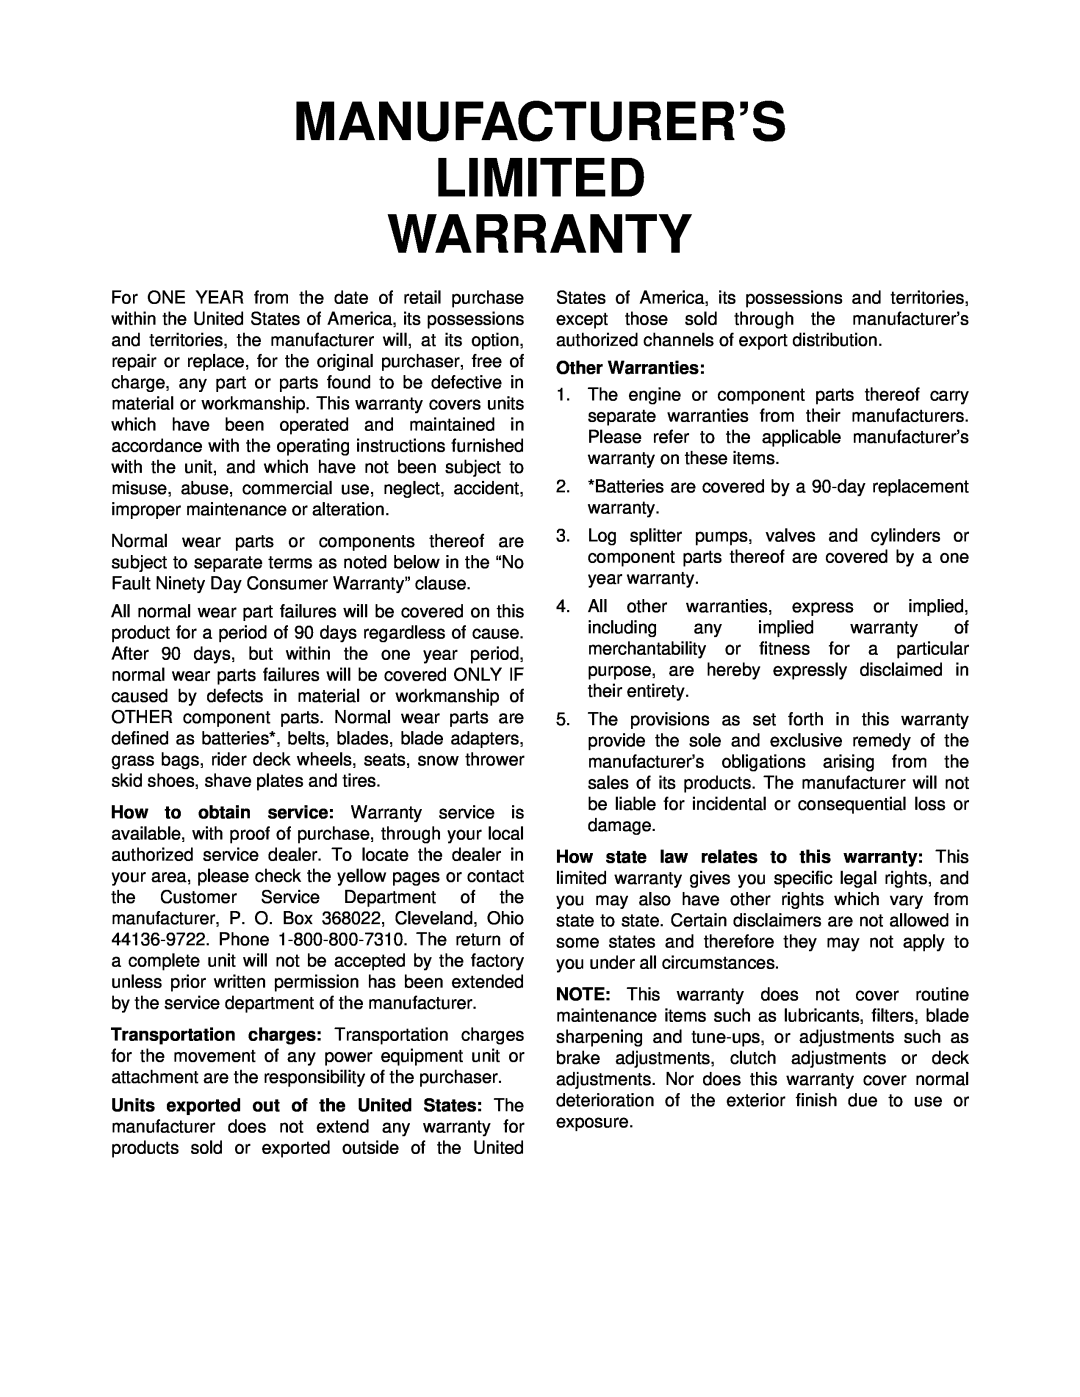 MTD 050 thru 062 manual Other Warranties, Manufacturer’S Limited Warranty 